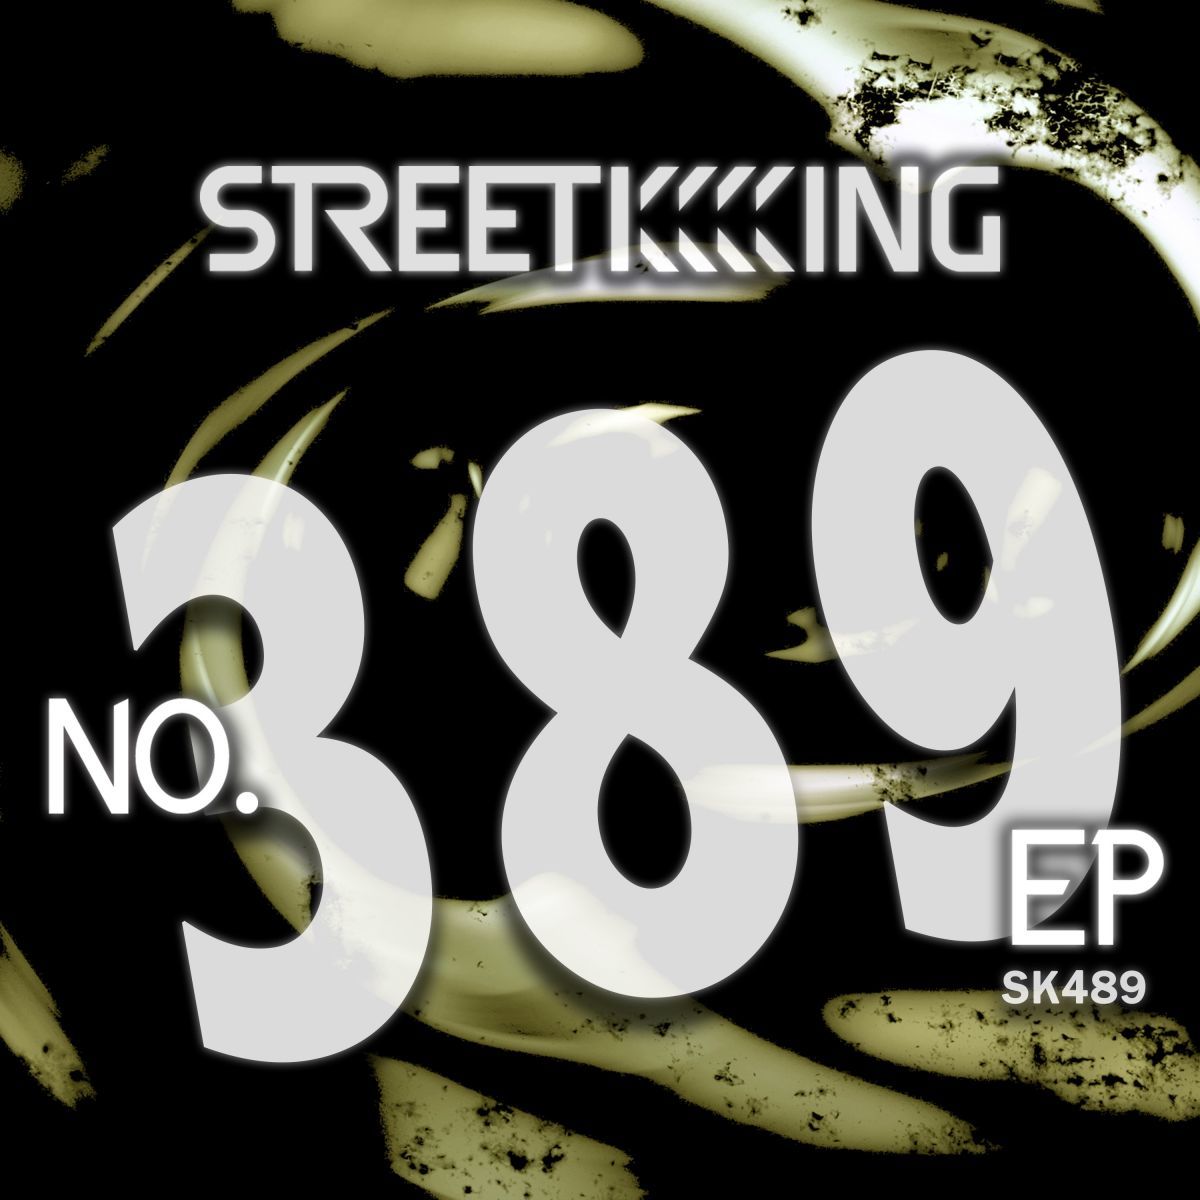 VA - No.389 EP / Street King